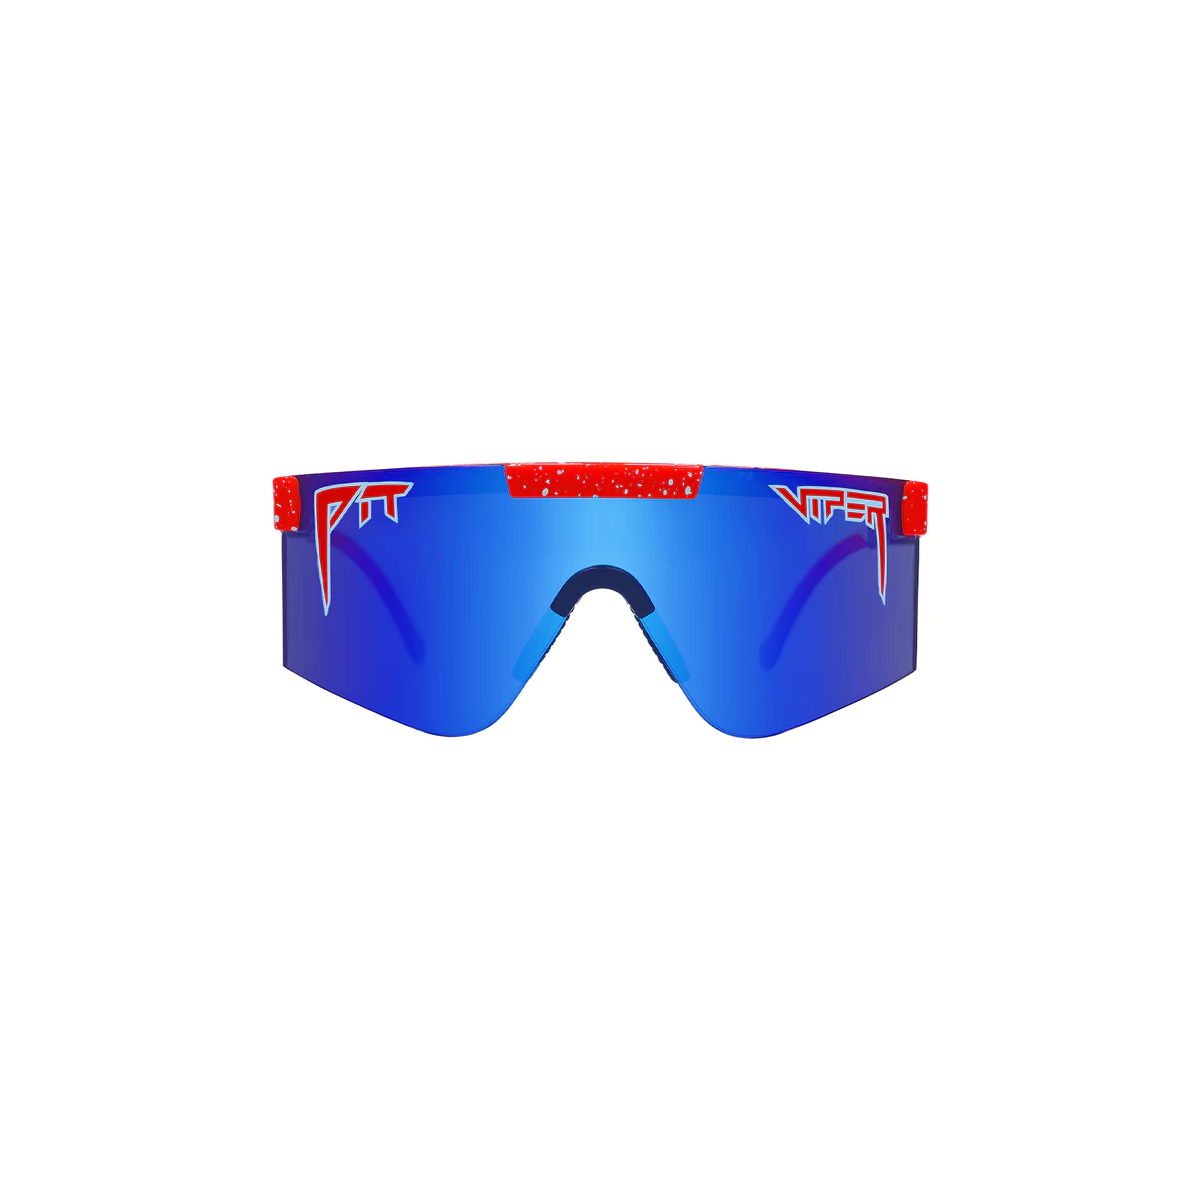 Gafas de sol Pit Viper The 2000 The Basketball Team lente azul marco negro y rojo